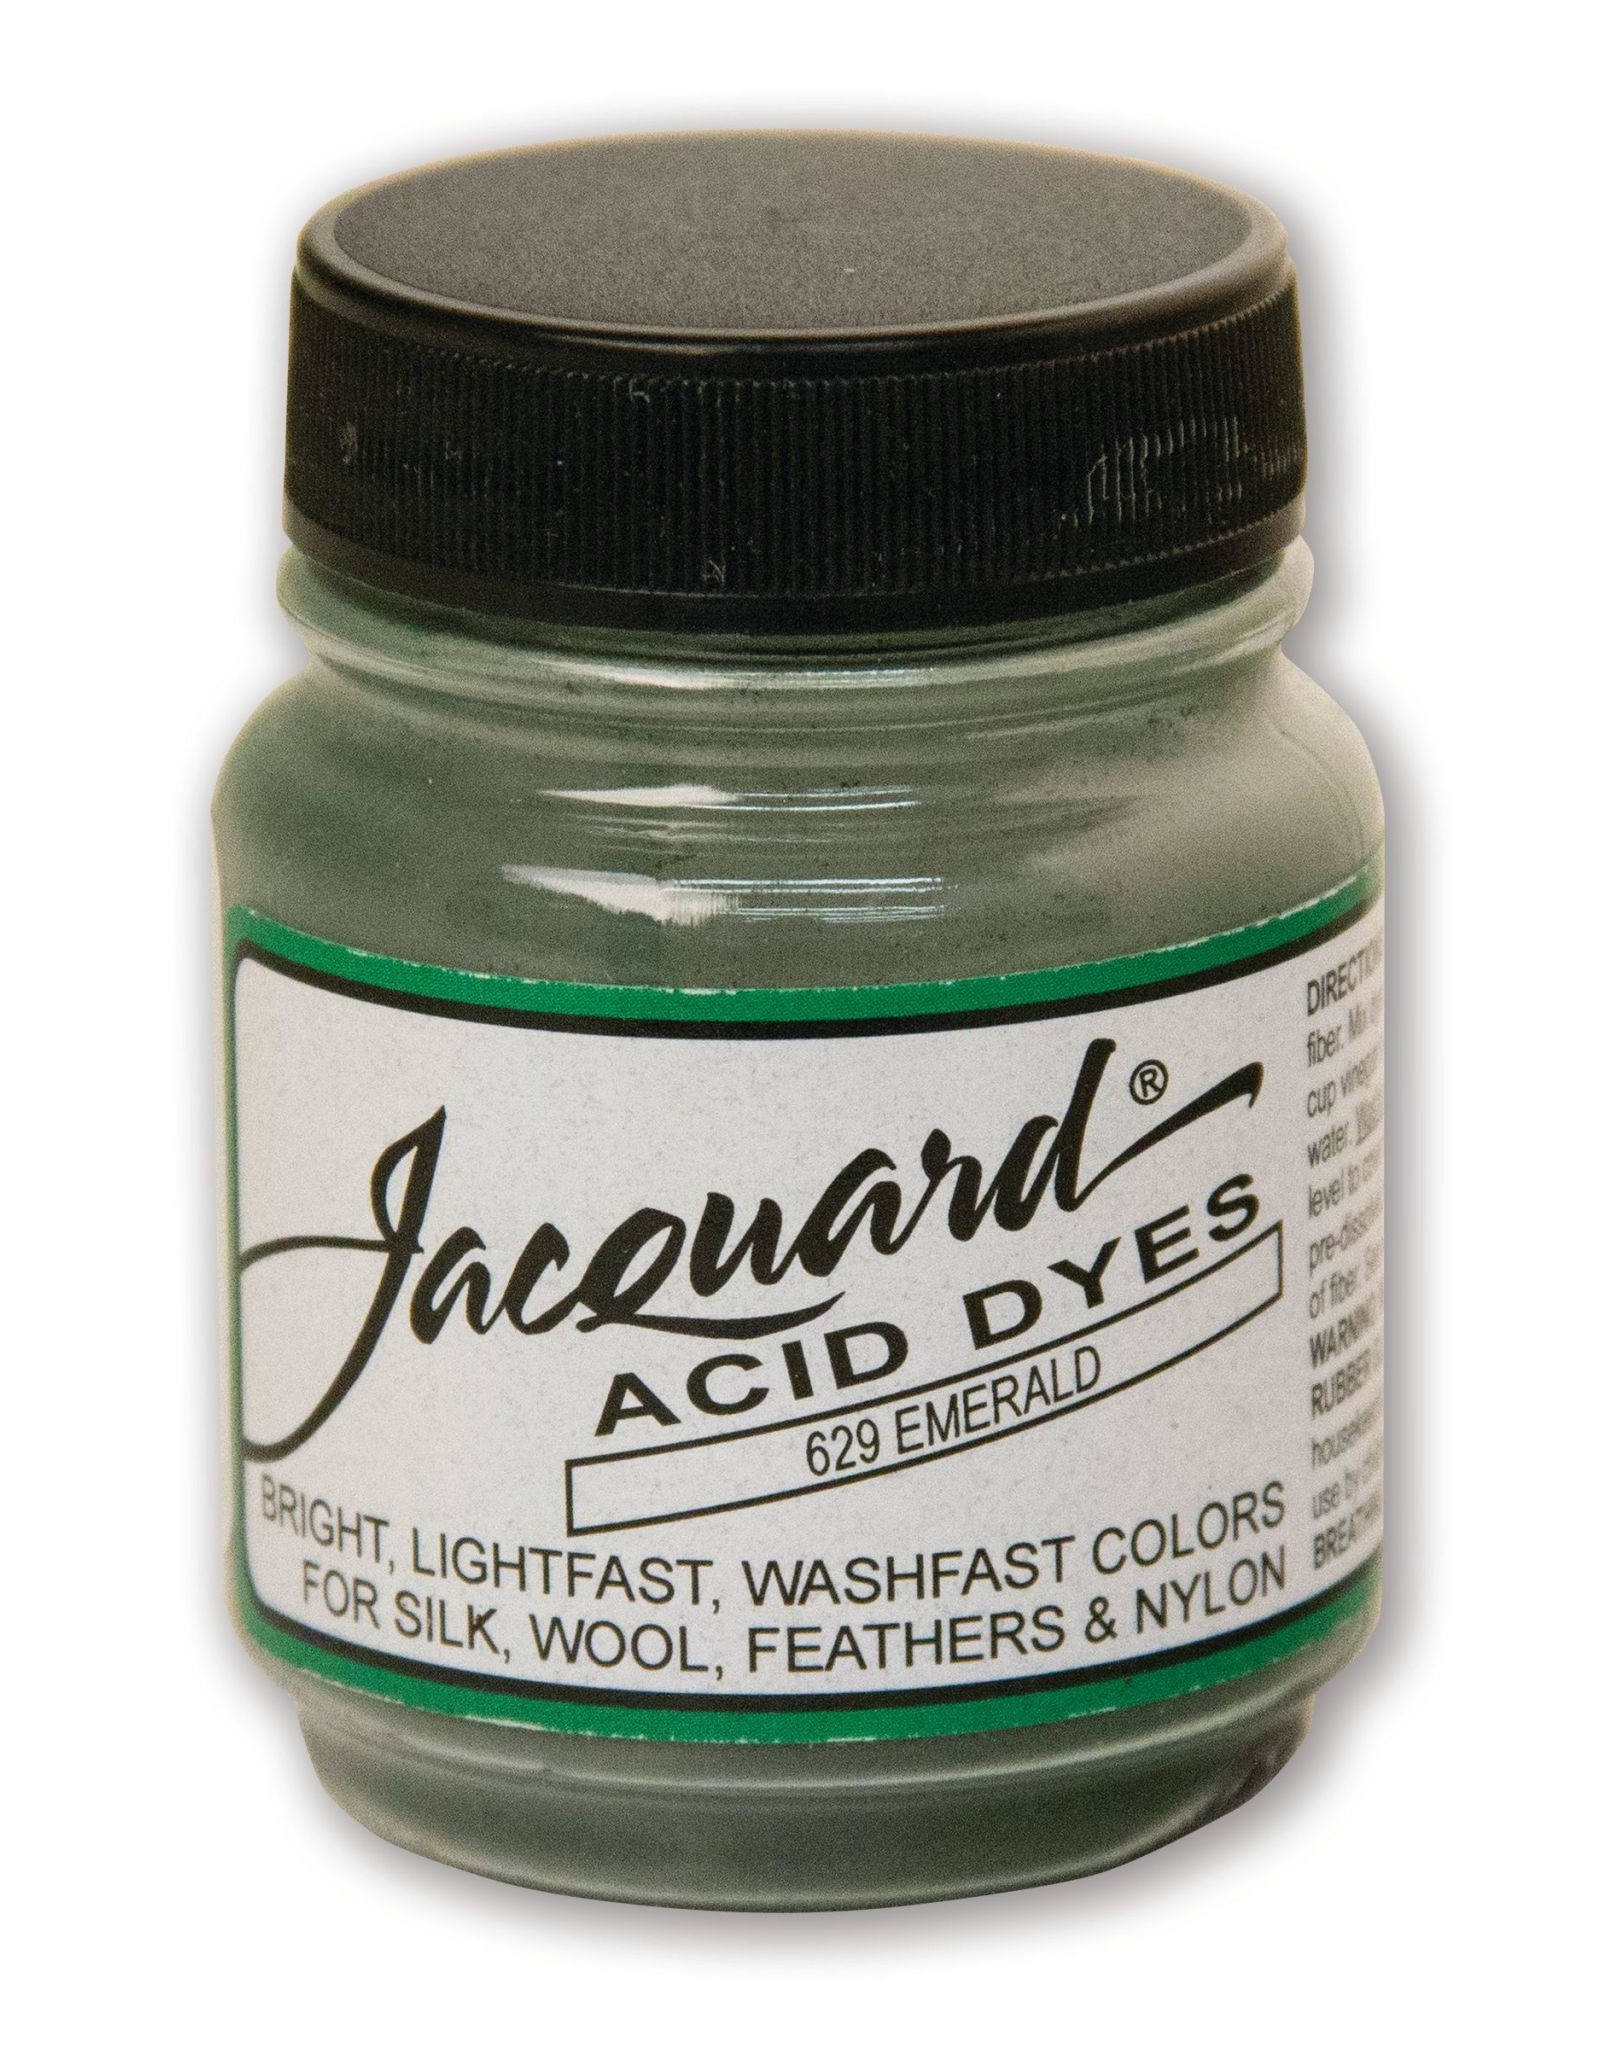 Jacquard Acid Dye #629 Emerald 1/2oz - The Art Store/Commercial Art Supply